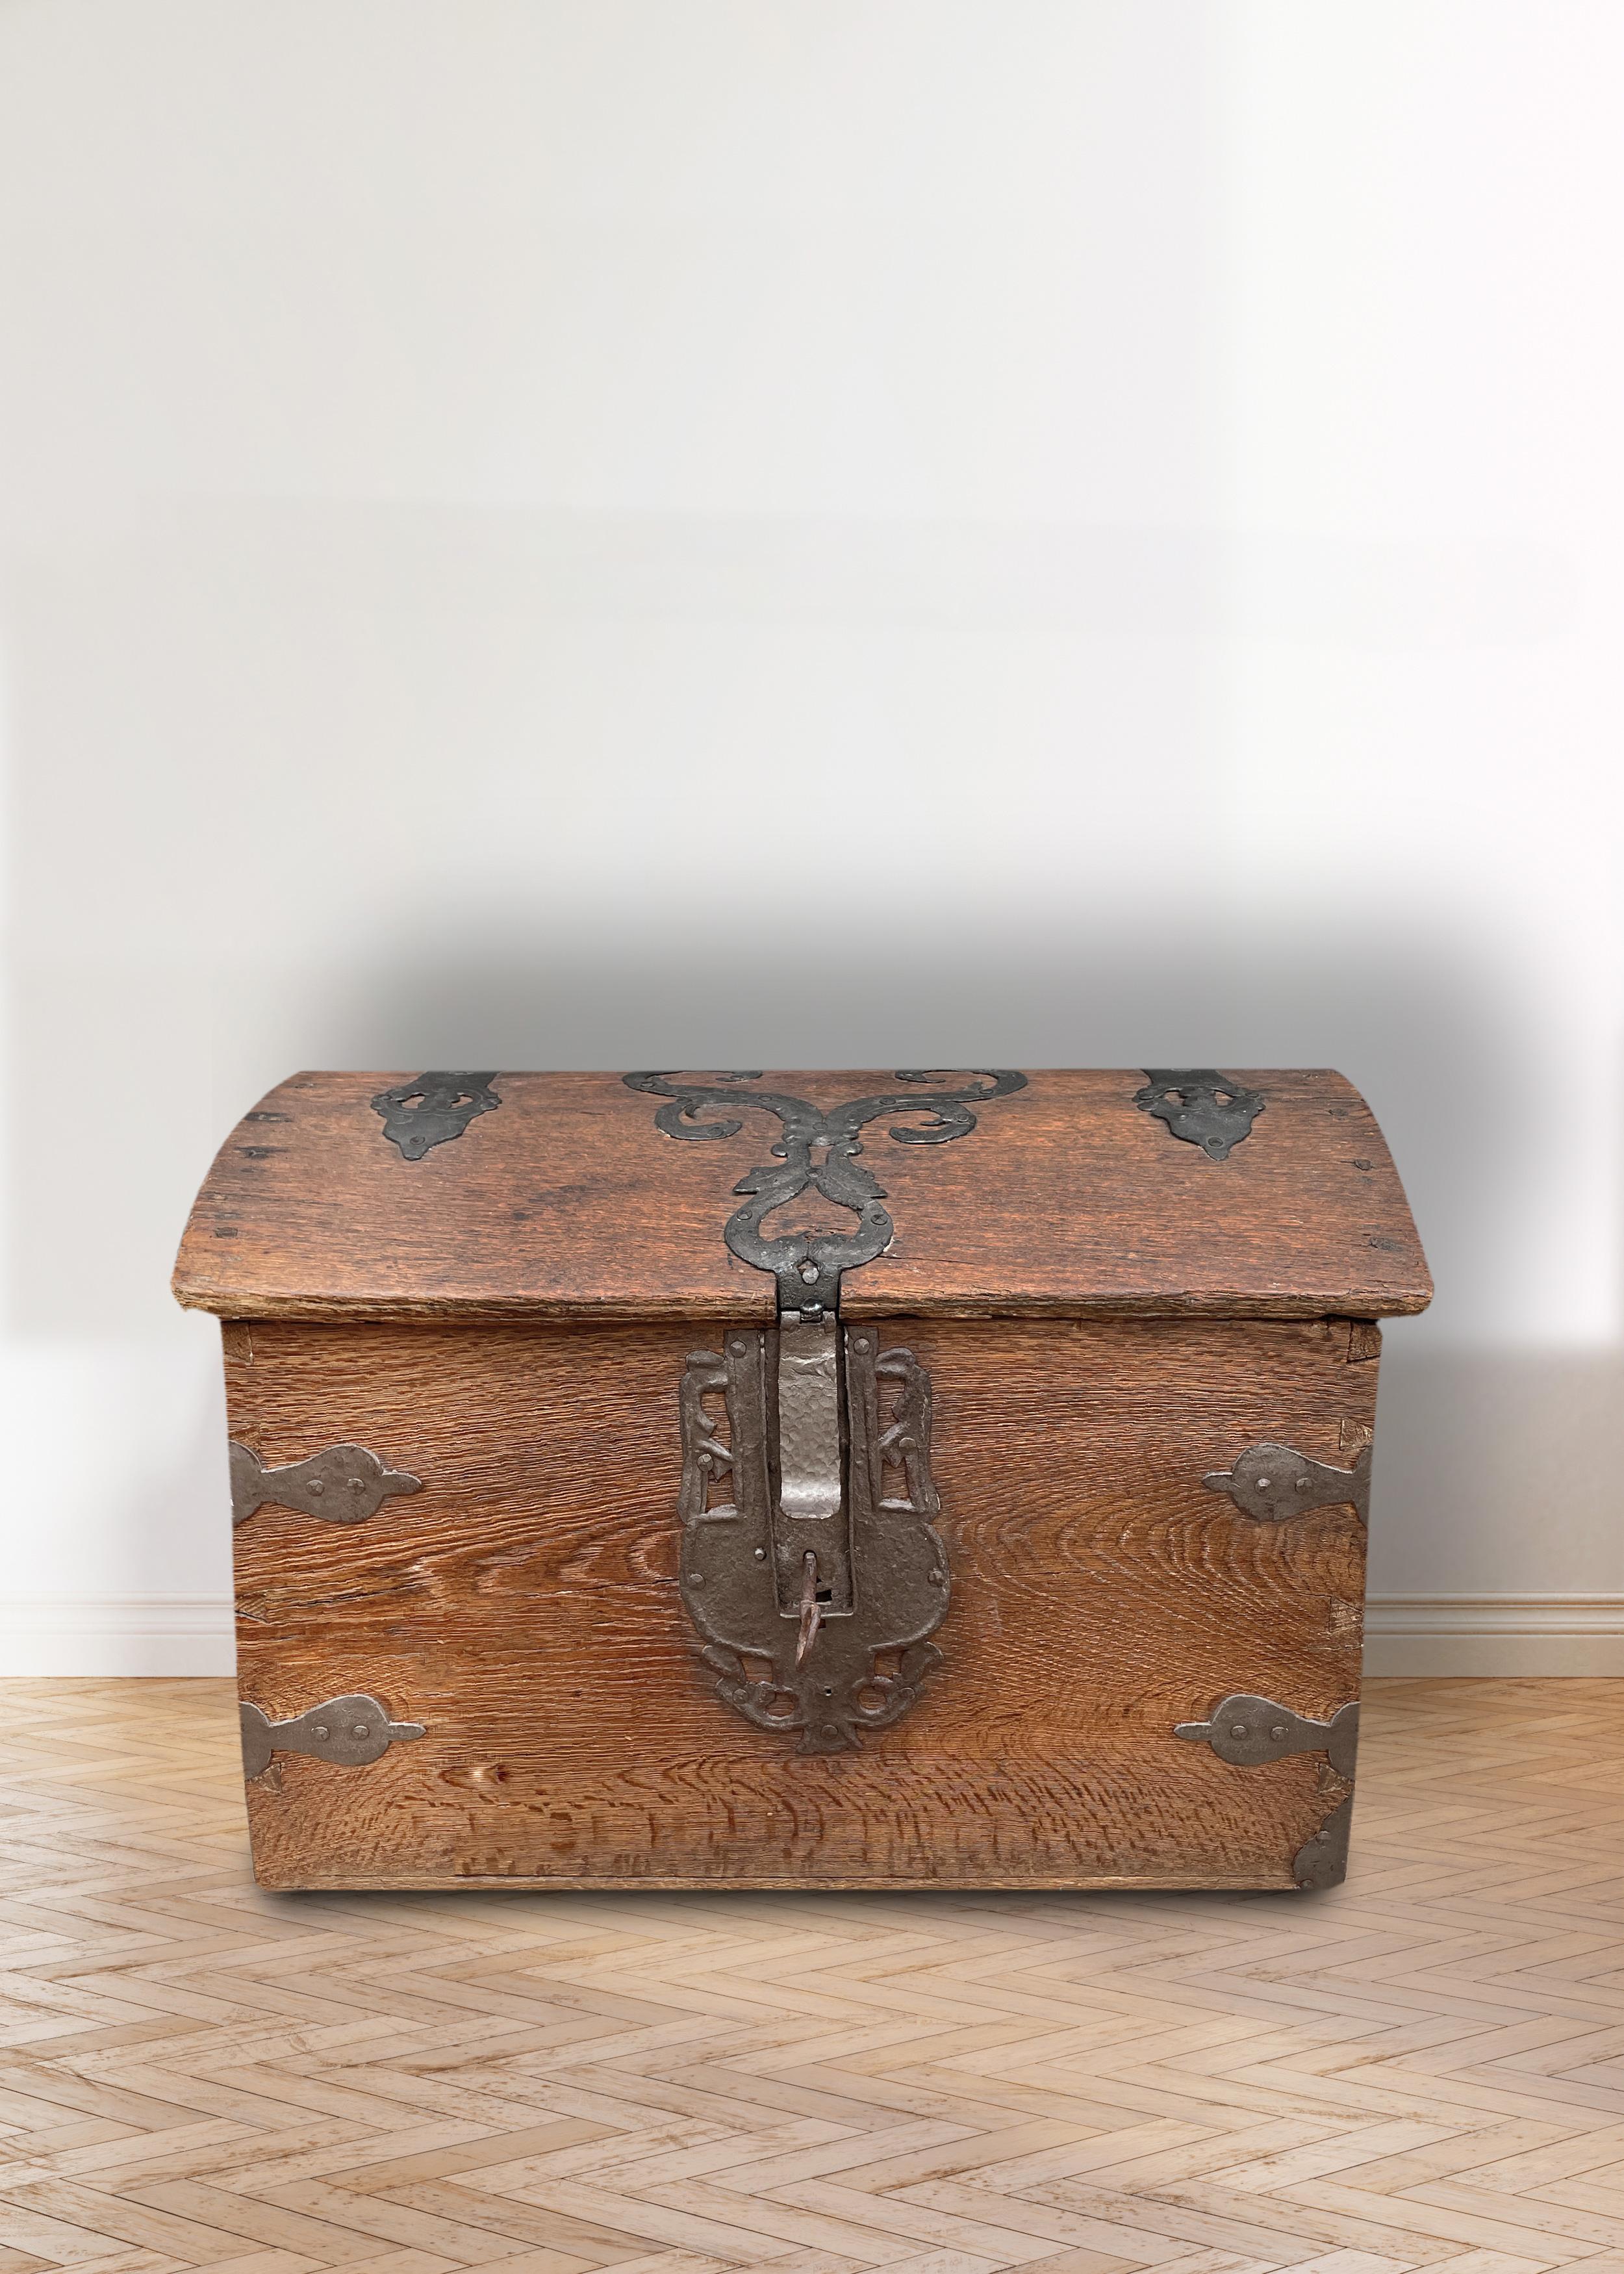 Chest-Coffer in Oak

H.47 cm – L.71 cm – D.45 cm

Antique chest-chest in oak wood. The lid has the classic 